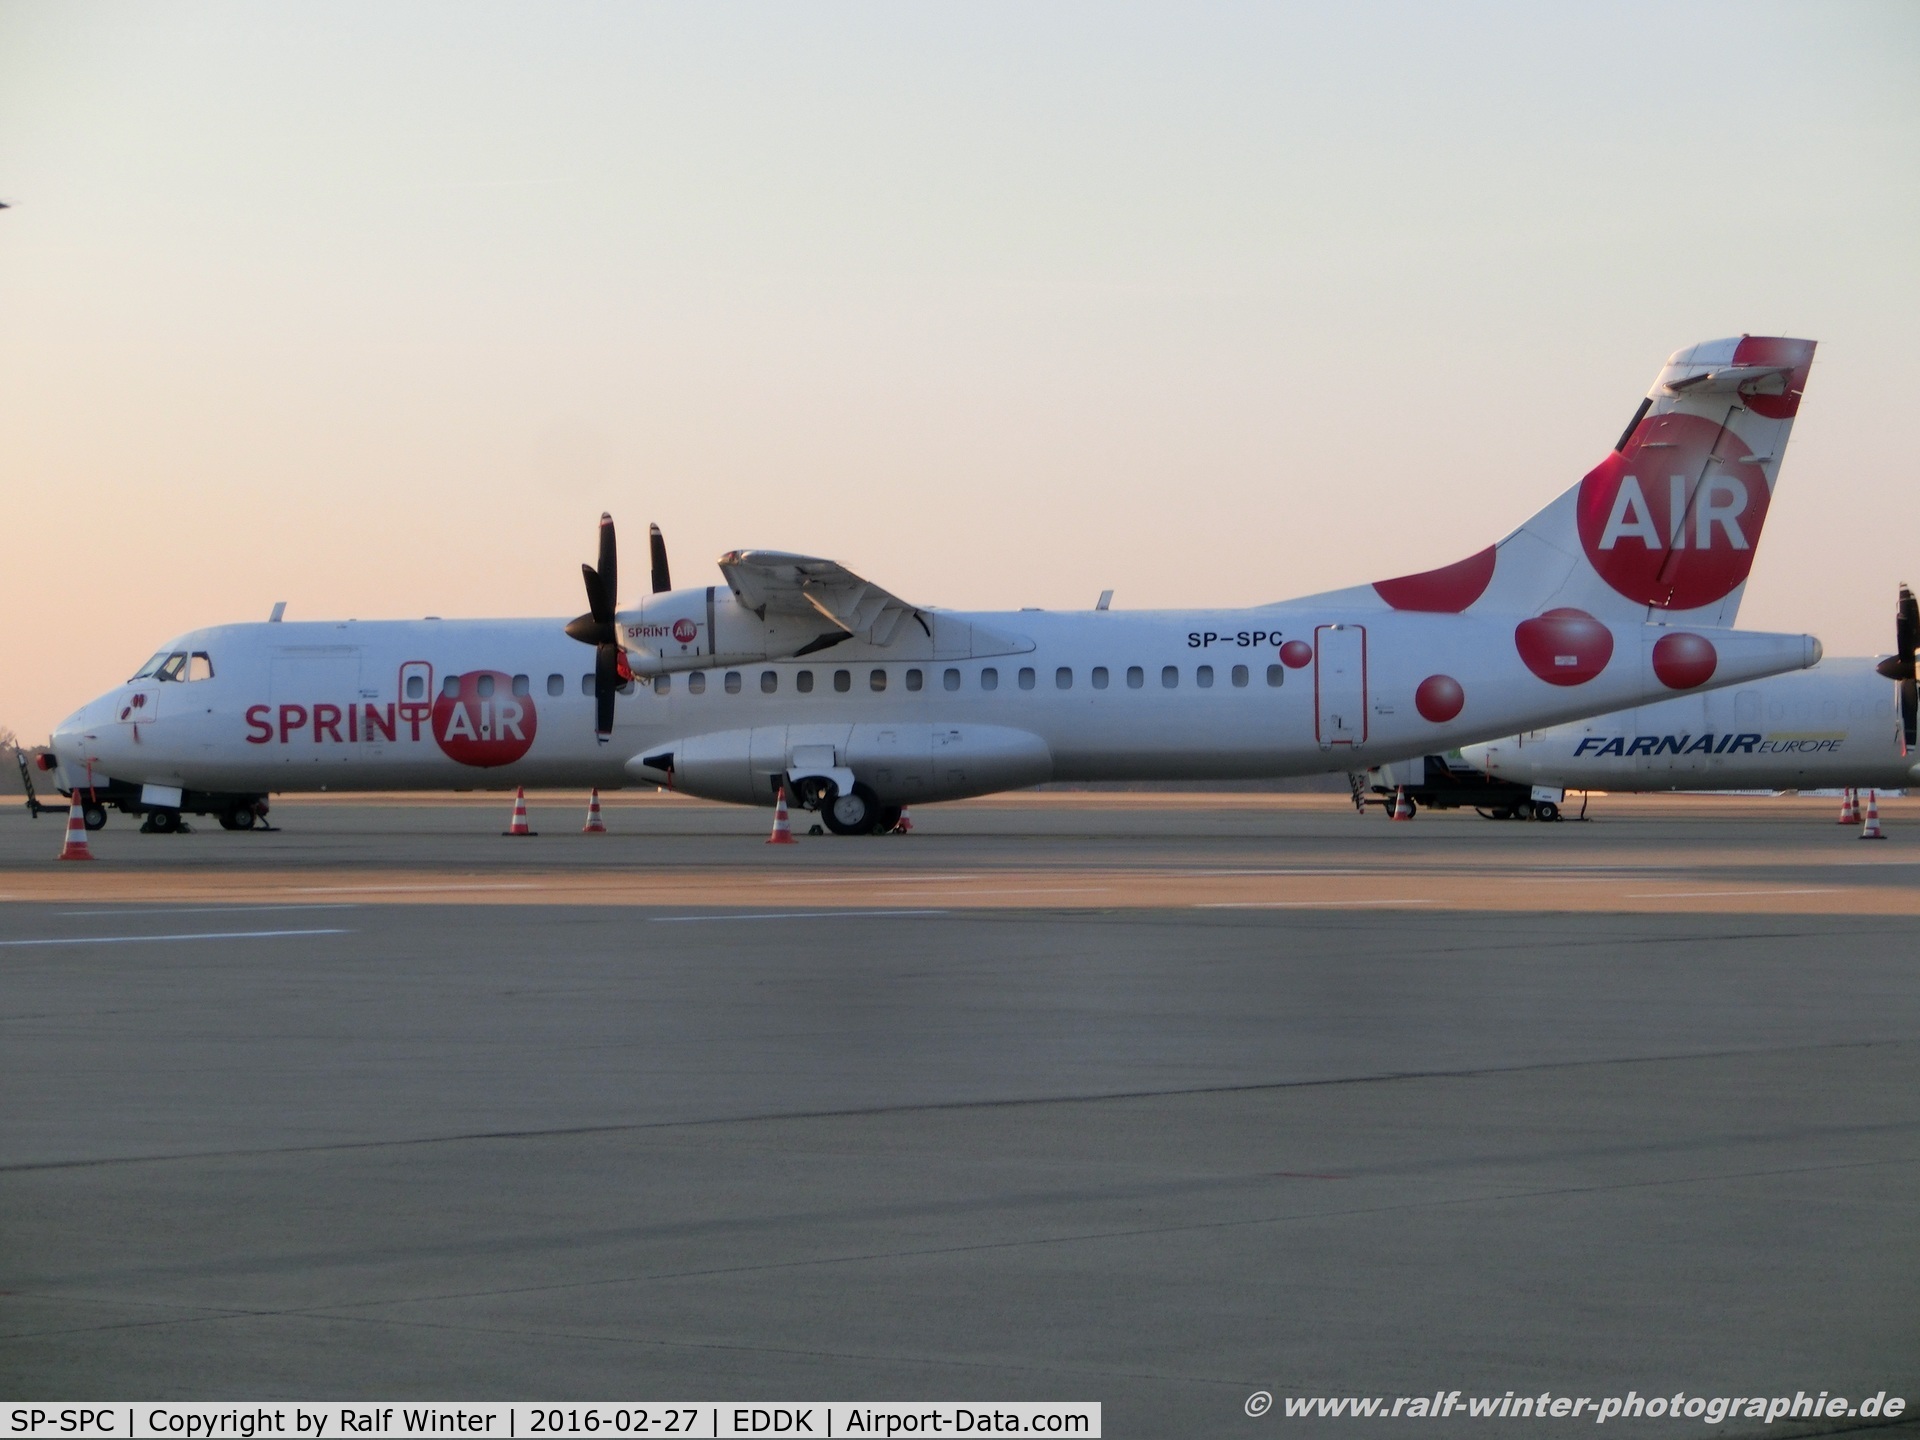 SP-SPC, 1992 ATR 72-202 C/N 272, ATR 72-202F - P8 SRN Sprintair - 272 - SP-SPC - 27.02.2016 - CGN